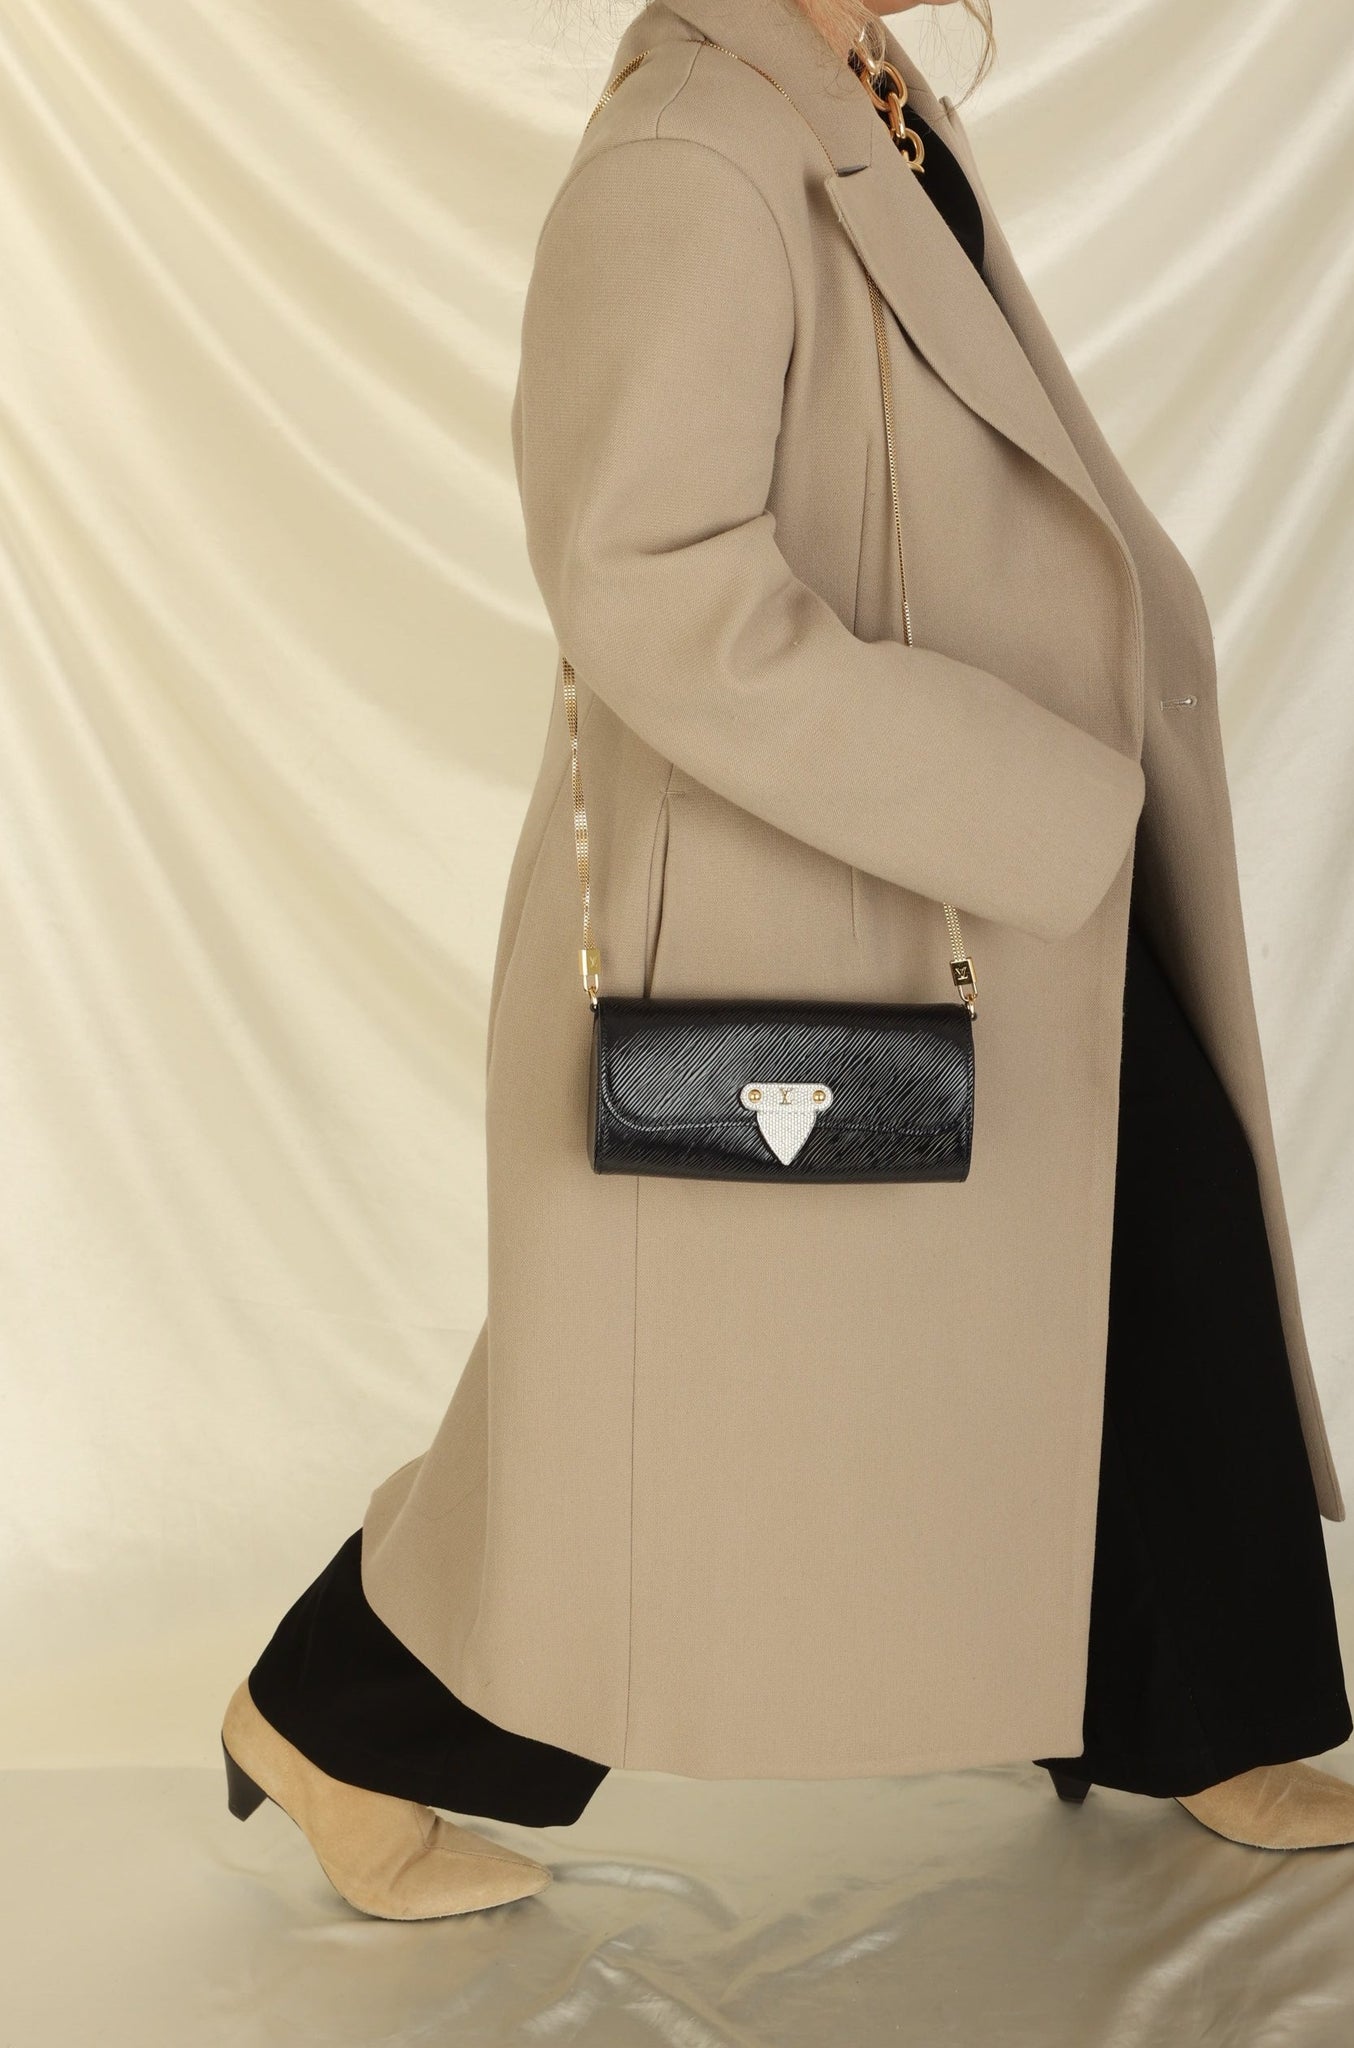 Ultra-Rare Louis Vuitton 2017 Electric Epi Crystal Chain Bag – SFN